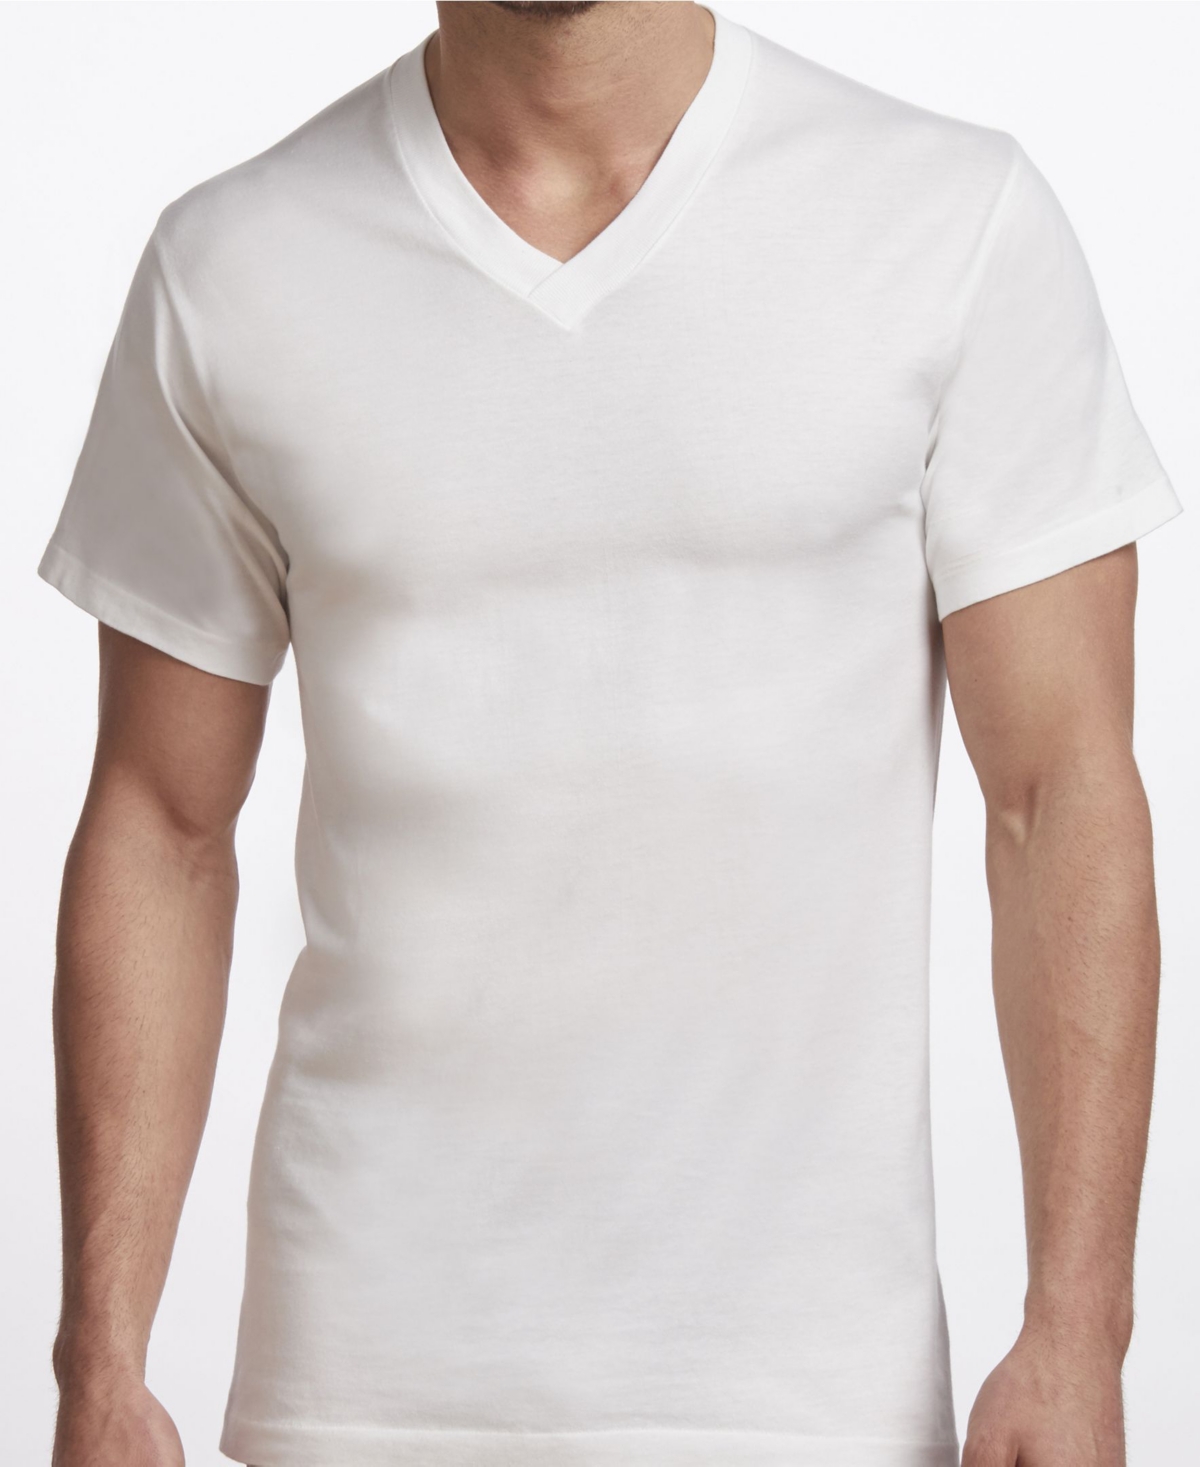 Premium Cotton Men's 2 Pack V-Neck Undershirt - White